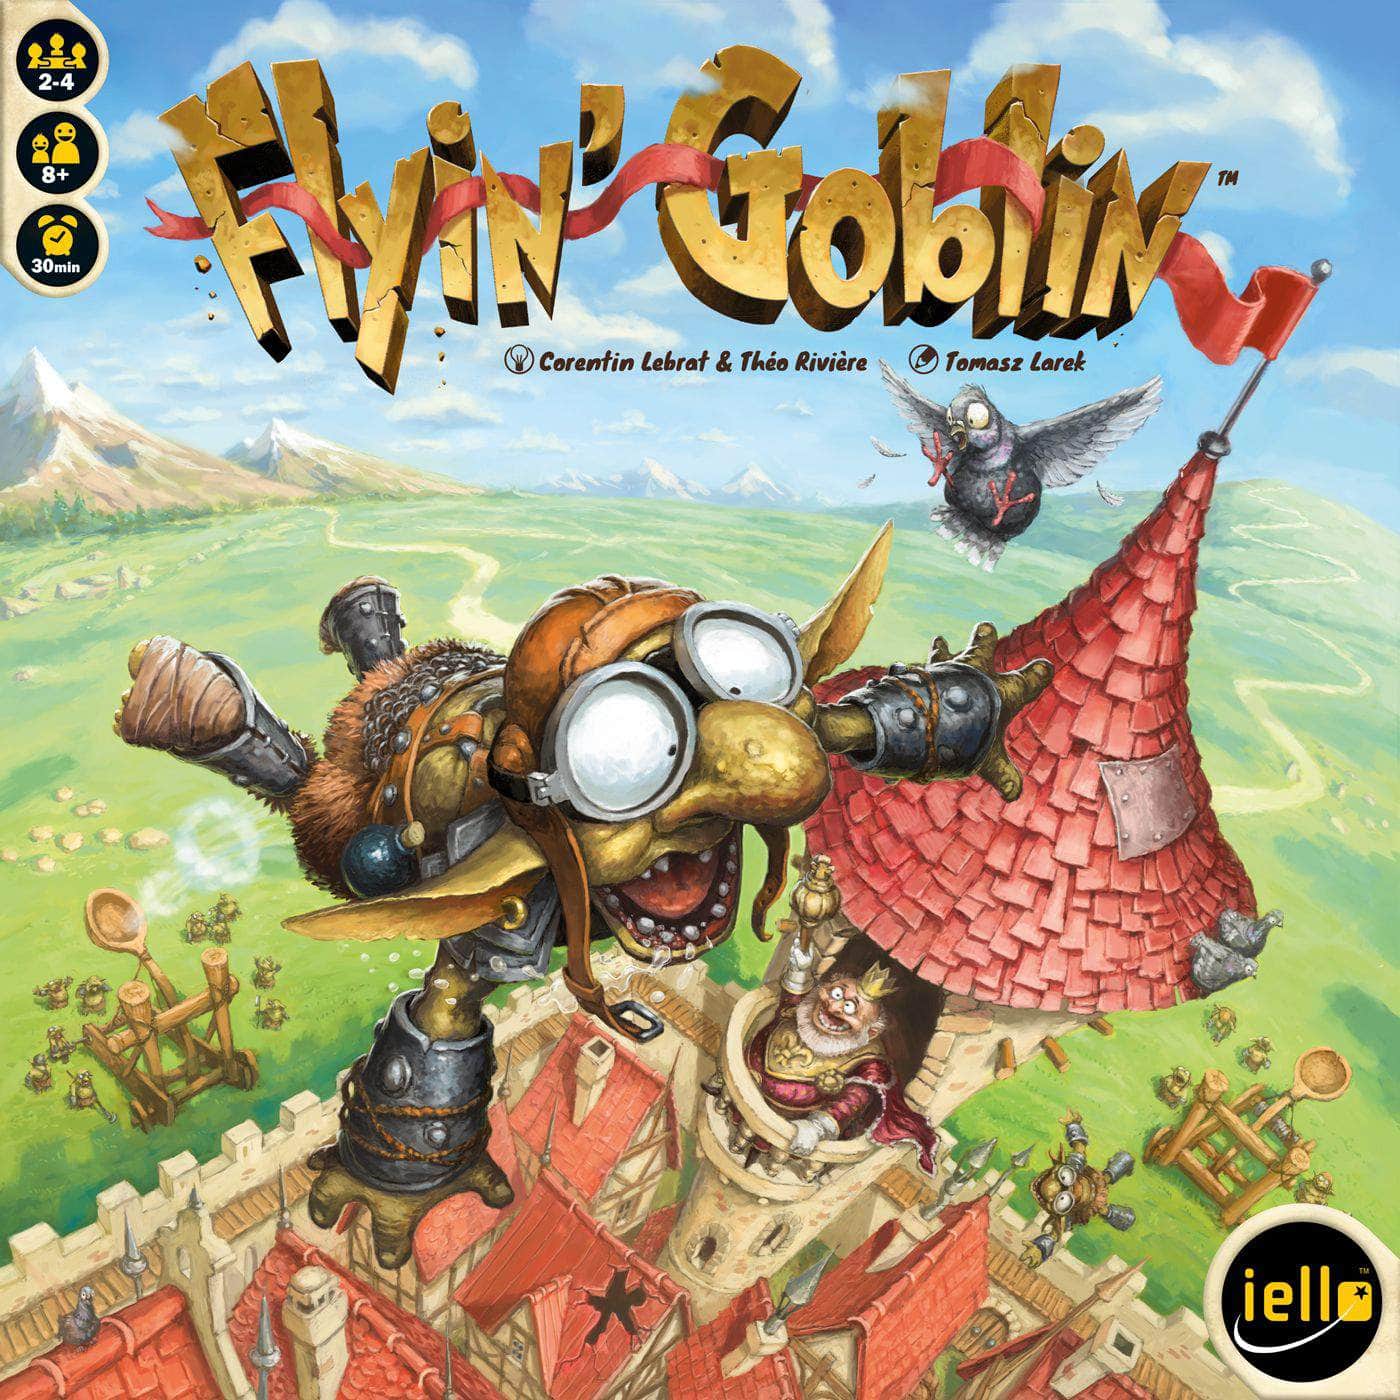 Flyin' Goblin (Retail Edition) Retail Board Game Iello 3760175516641 KS800685A